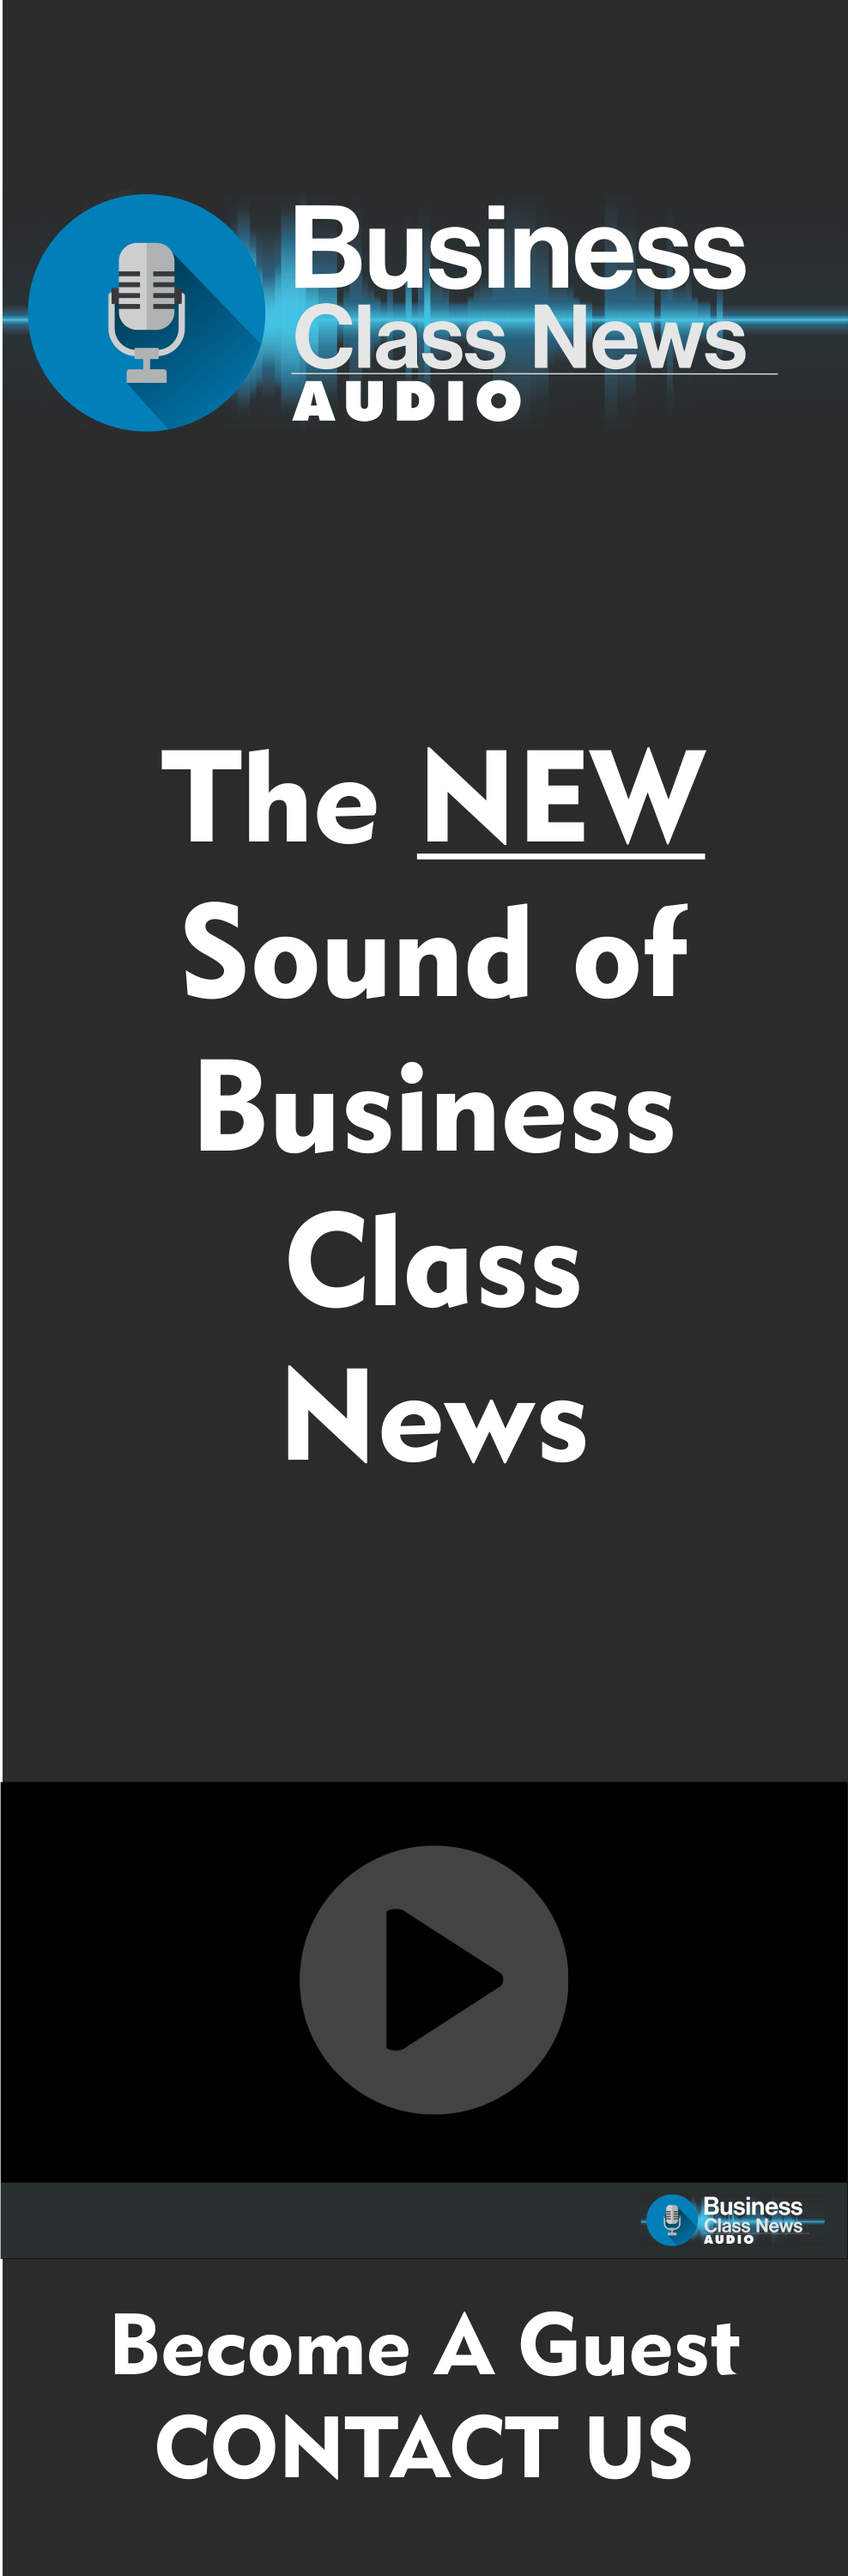 The Business Class News Editors’ Choice Award 2018 is Announced